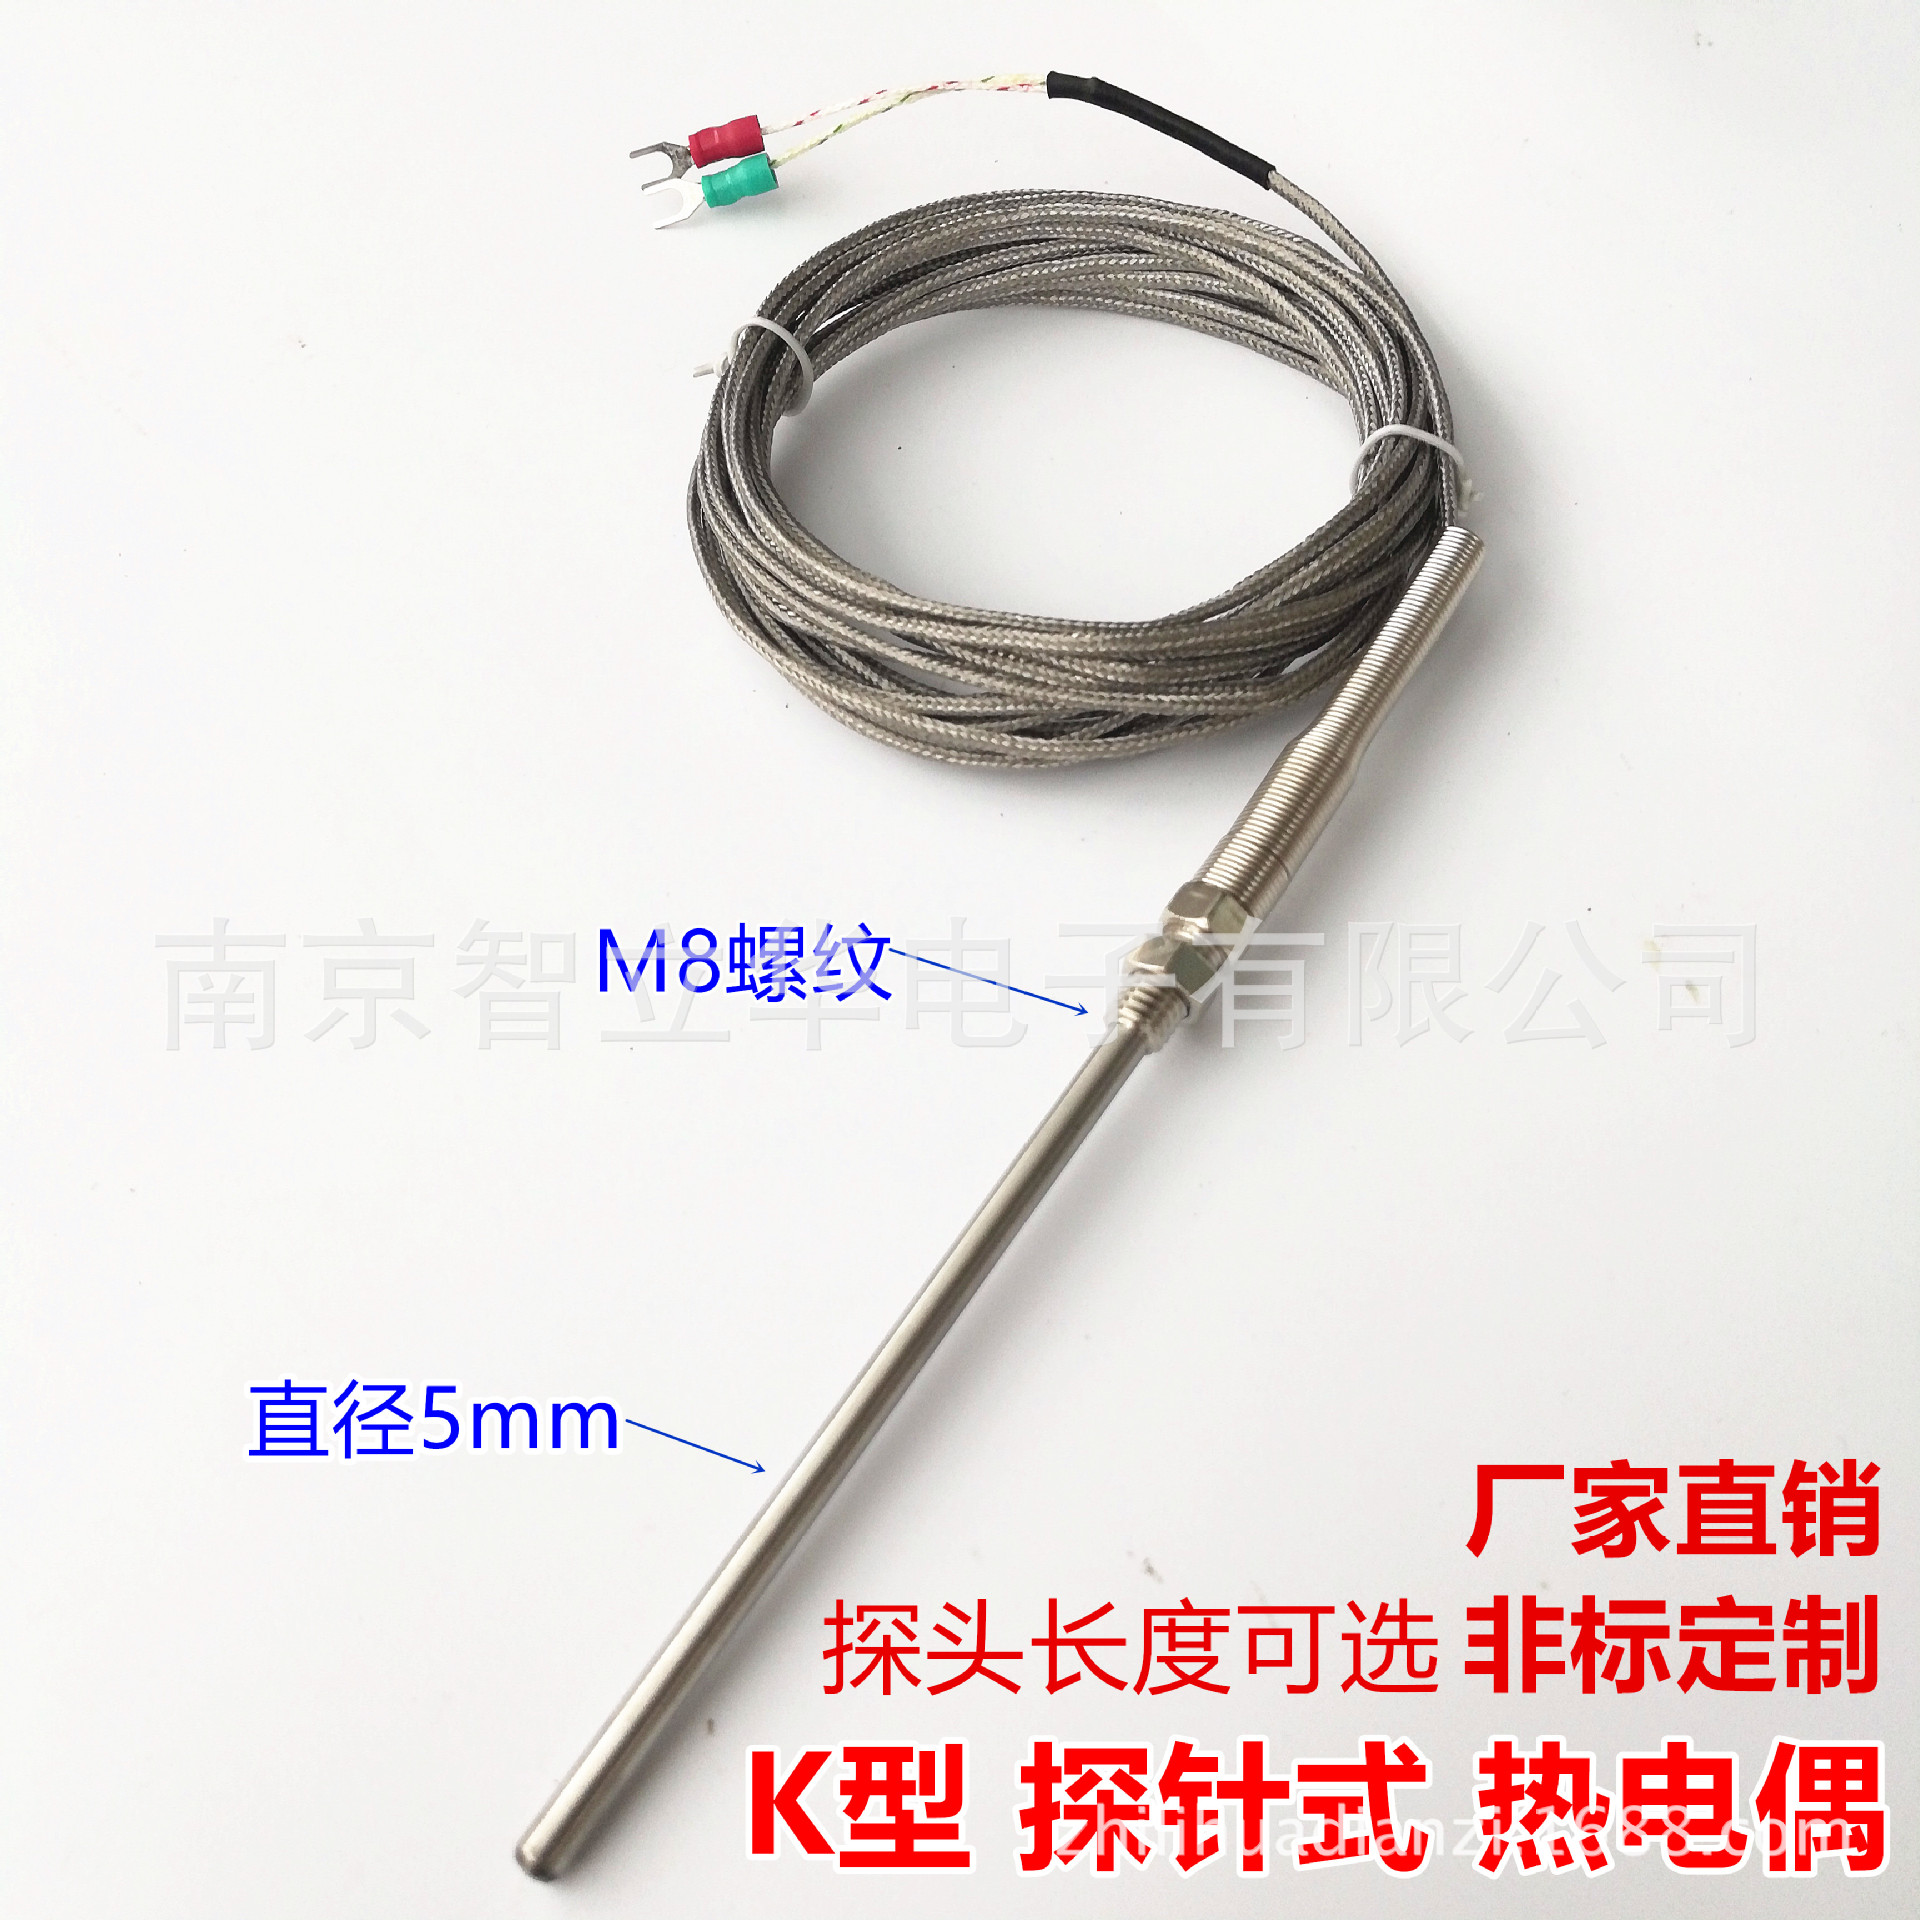 K-type thermocouple Probe type Electric Ougan isotherms Imitation imports probe Temperature Sensor M8 Thread